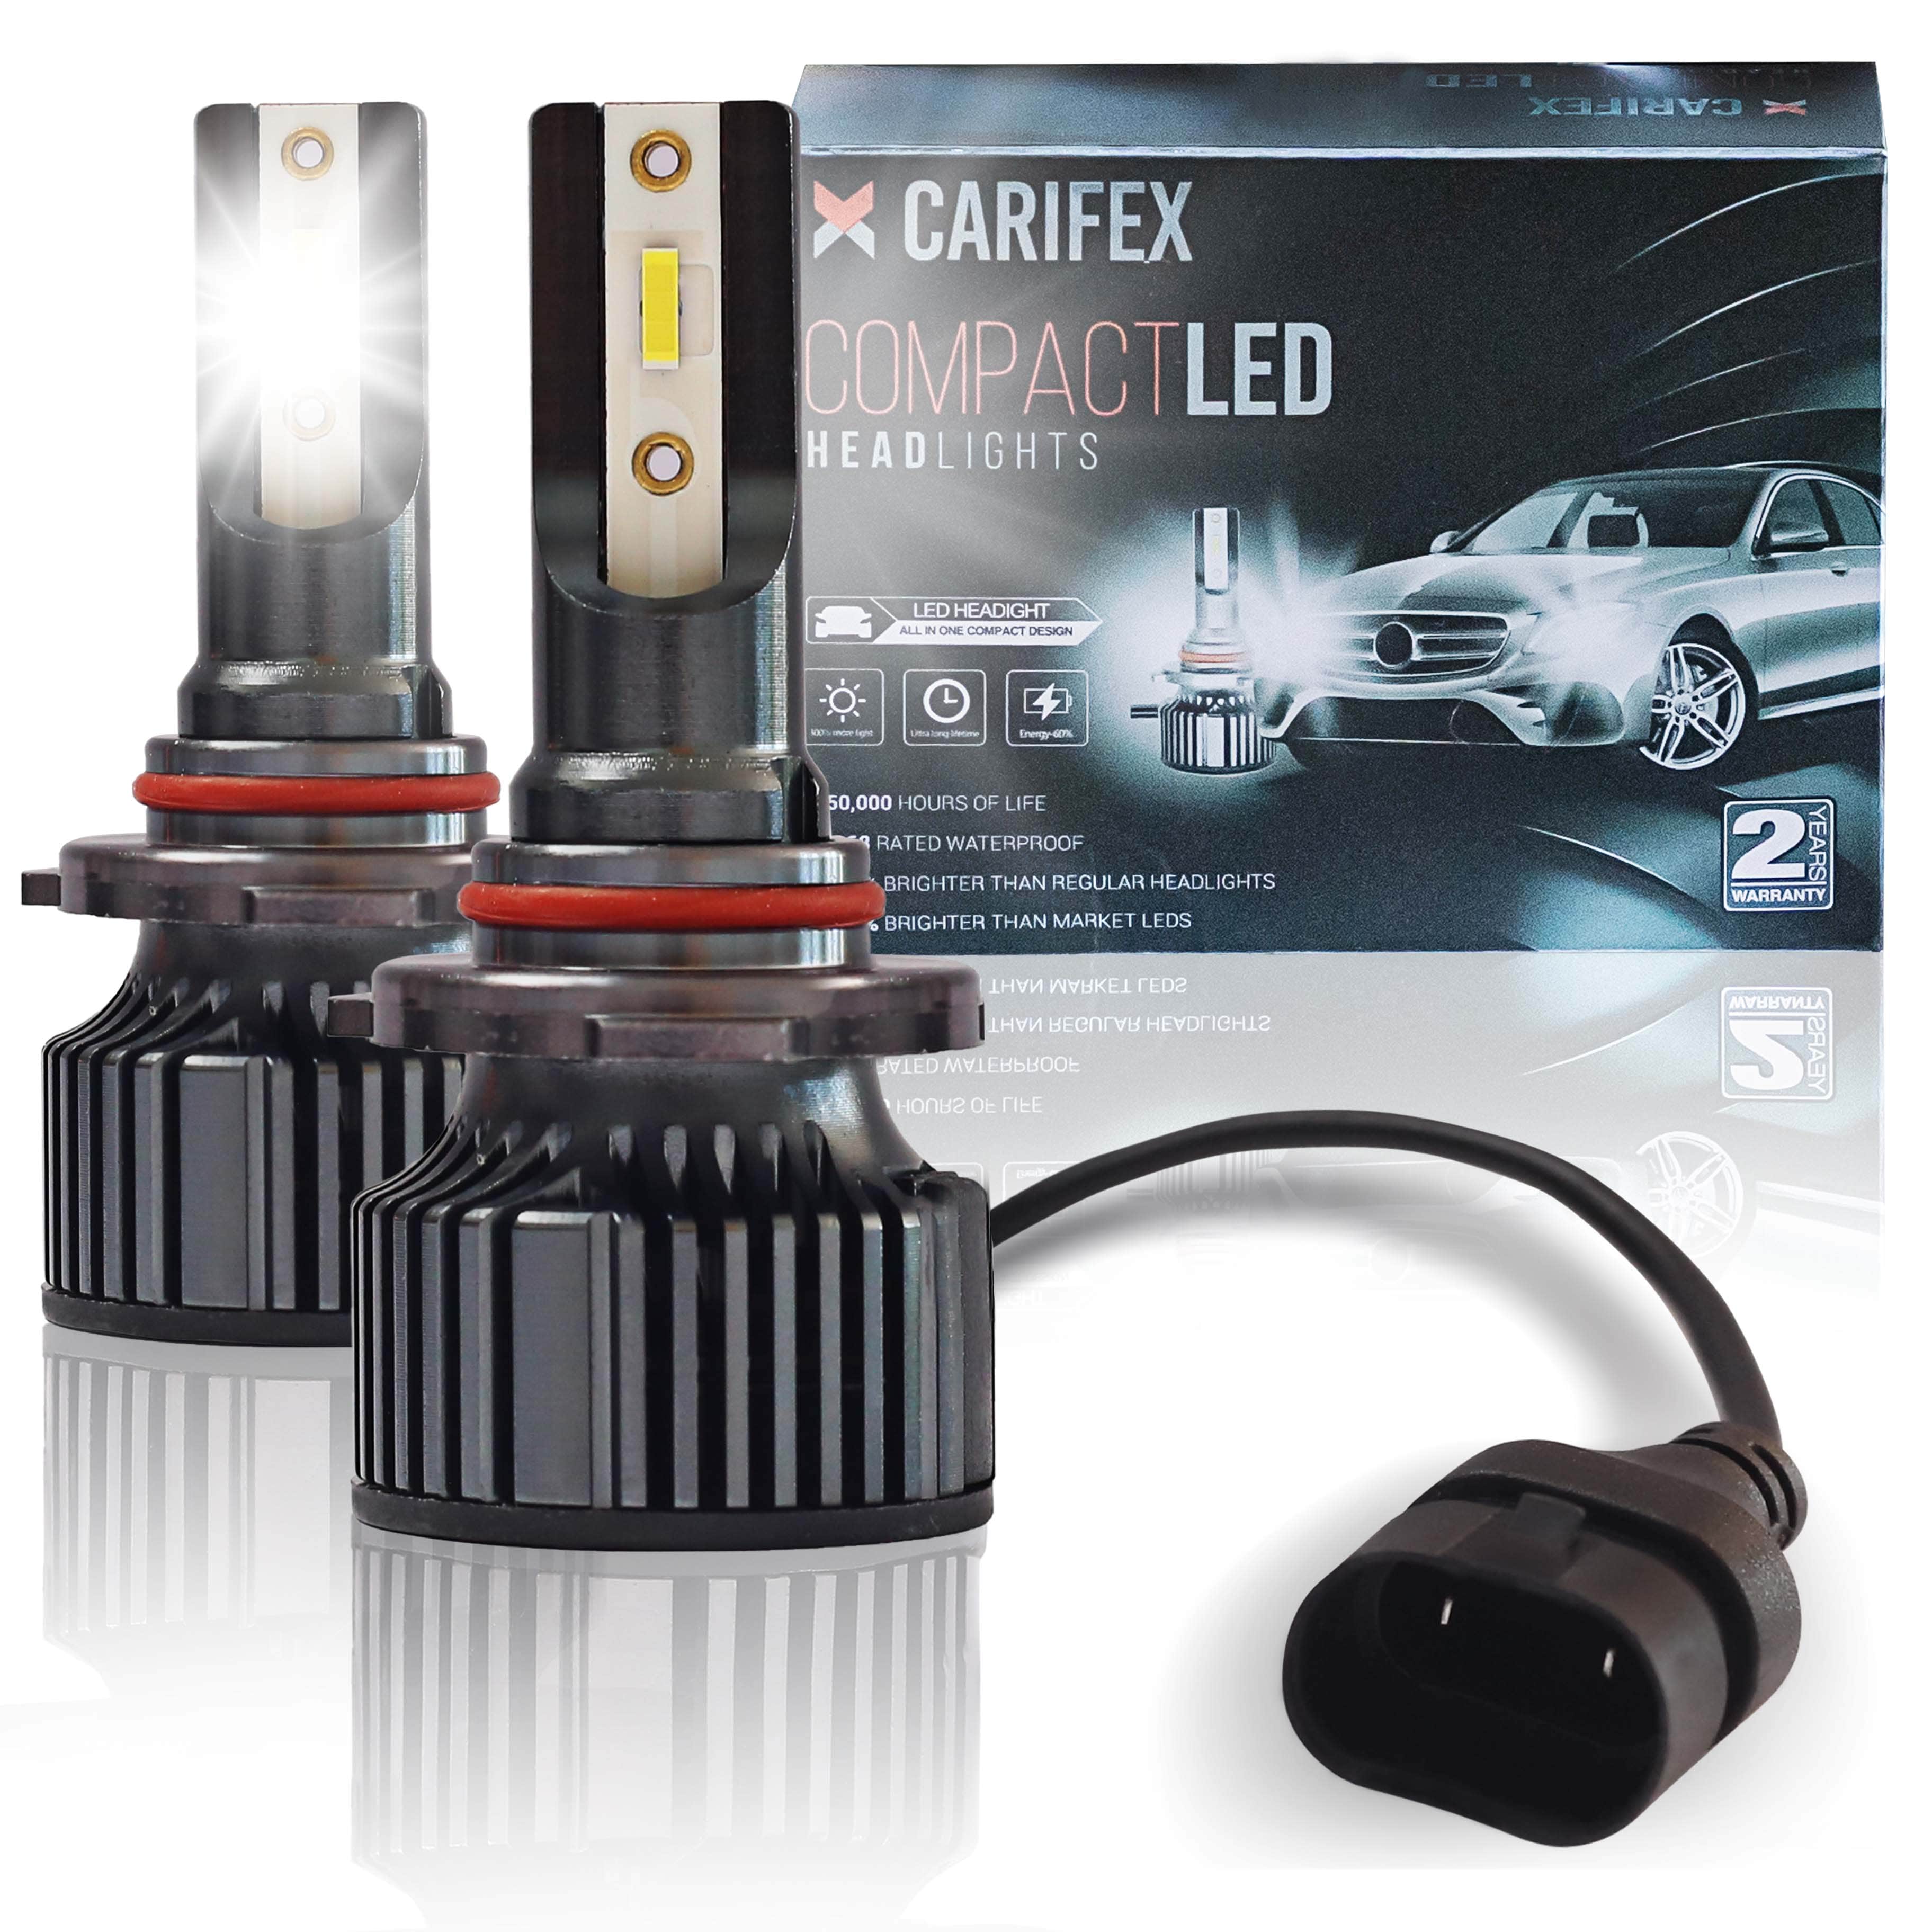 Carifex Compact LED Headlight Compact 9005 LED Headlight Bulbs